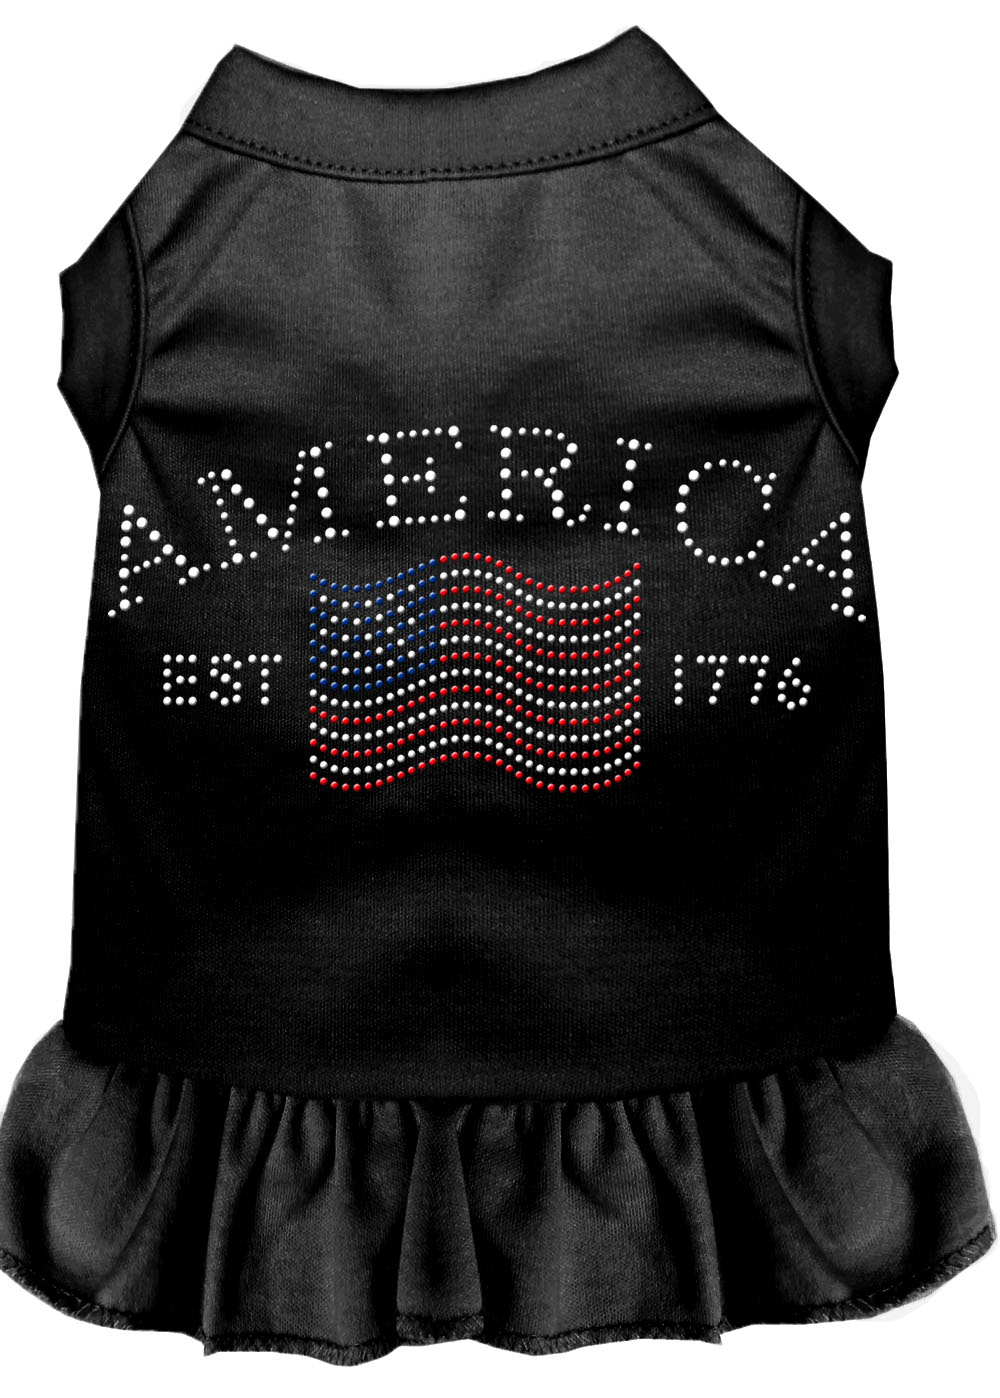 Classic America Rhinestone Dress Black XXL